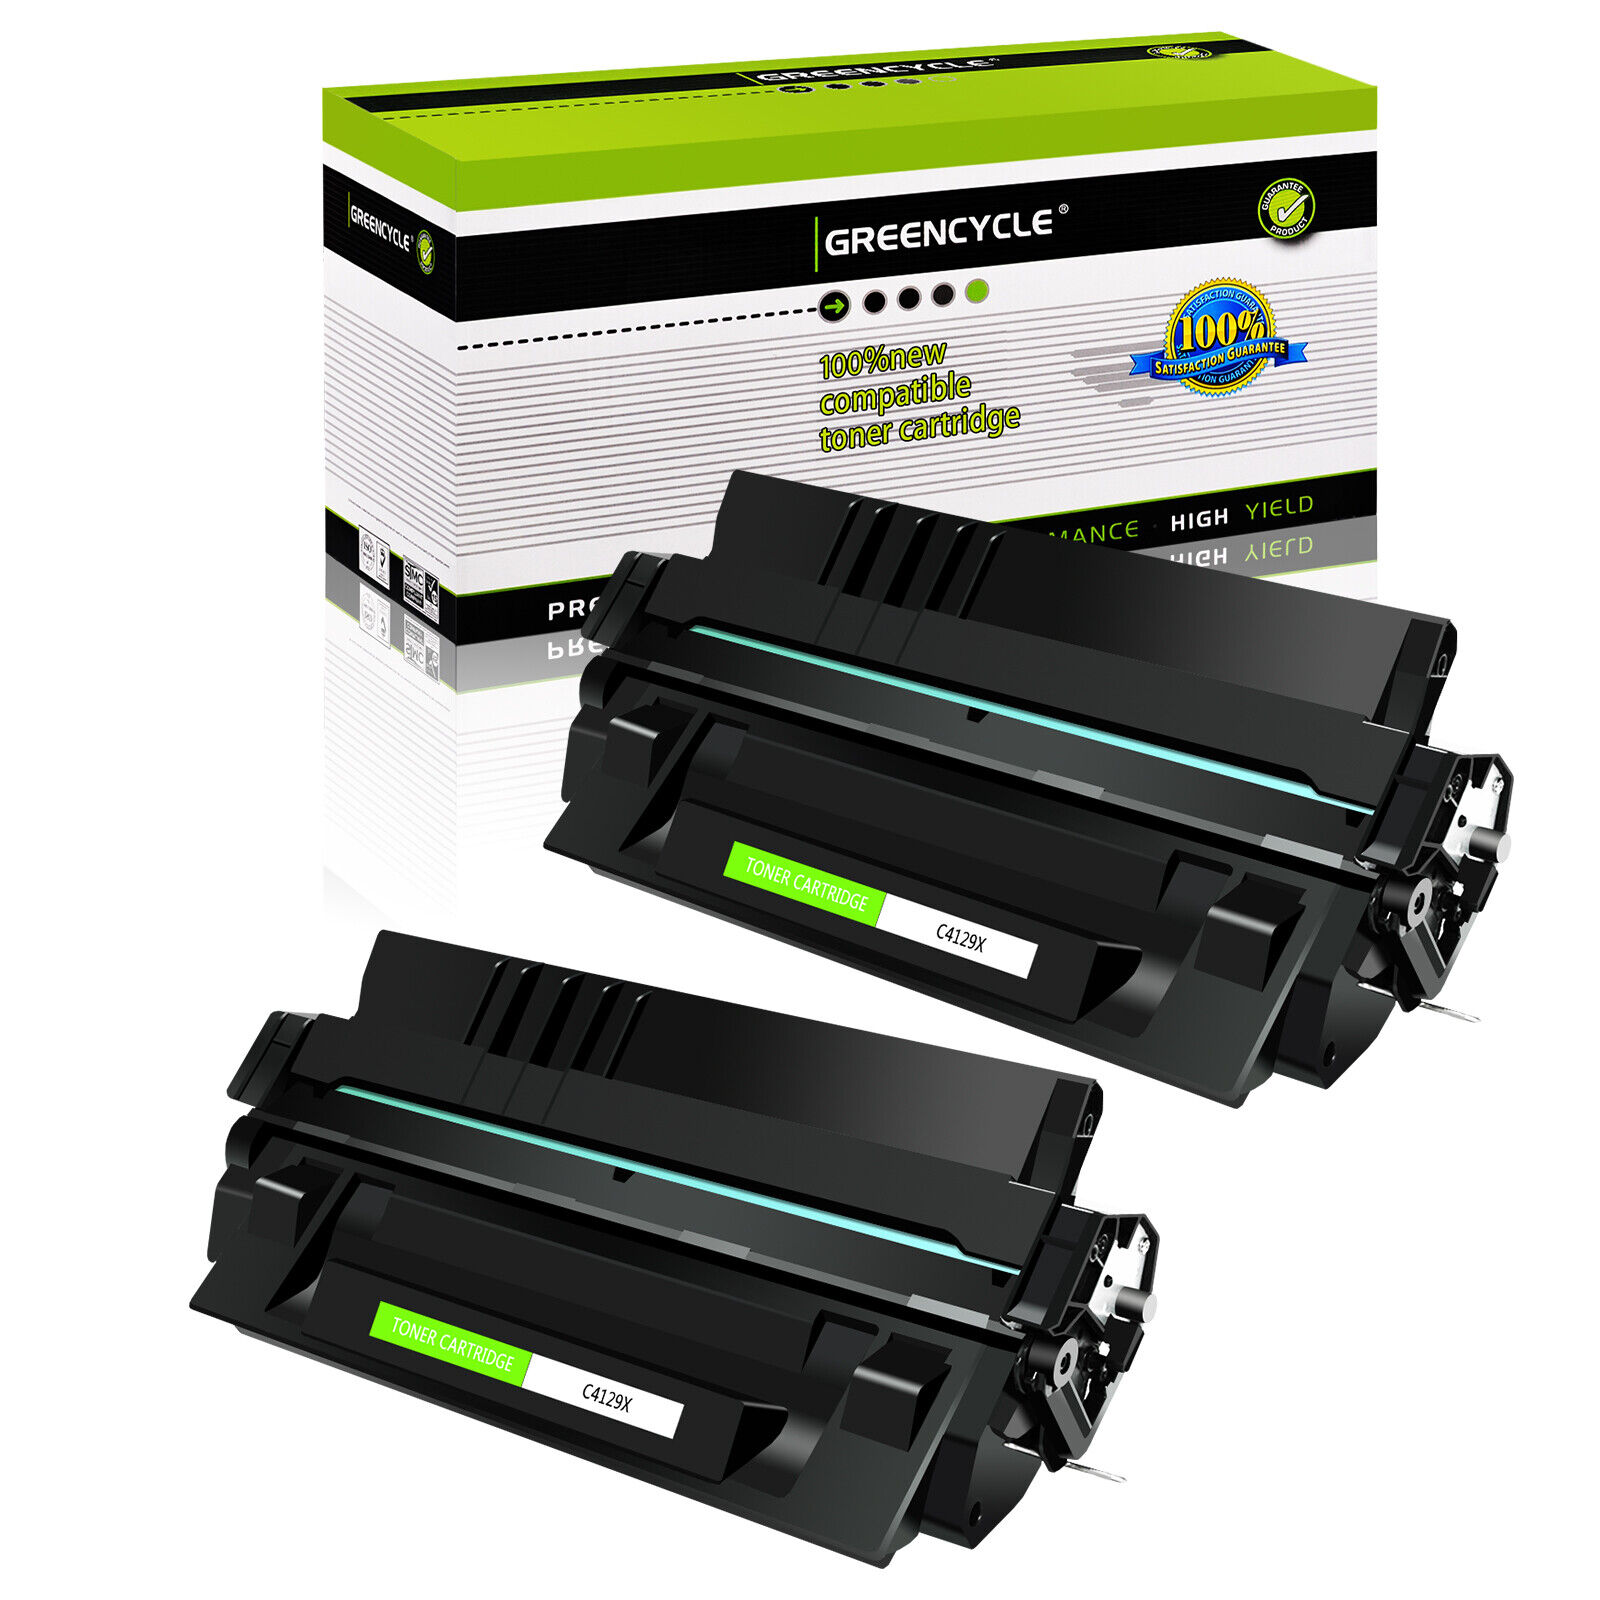 For HP LaserJet 5000n 5100tn Printer- High Yield Toner Cartridge C4129X 29X 2PK